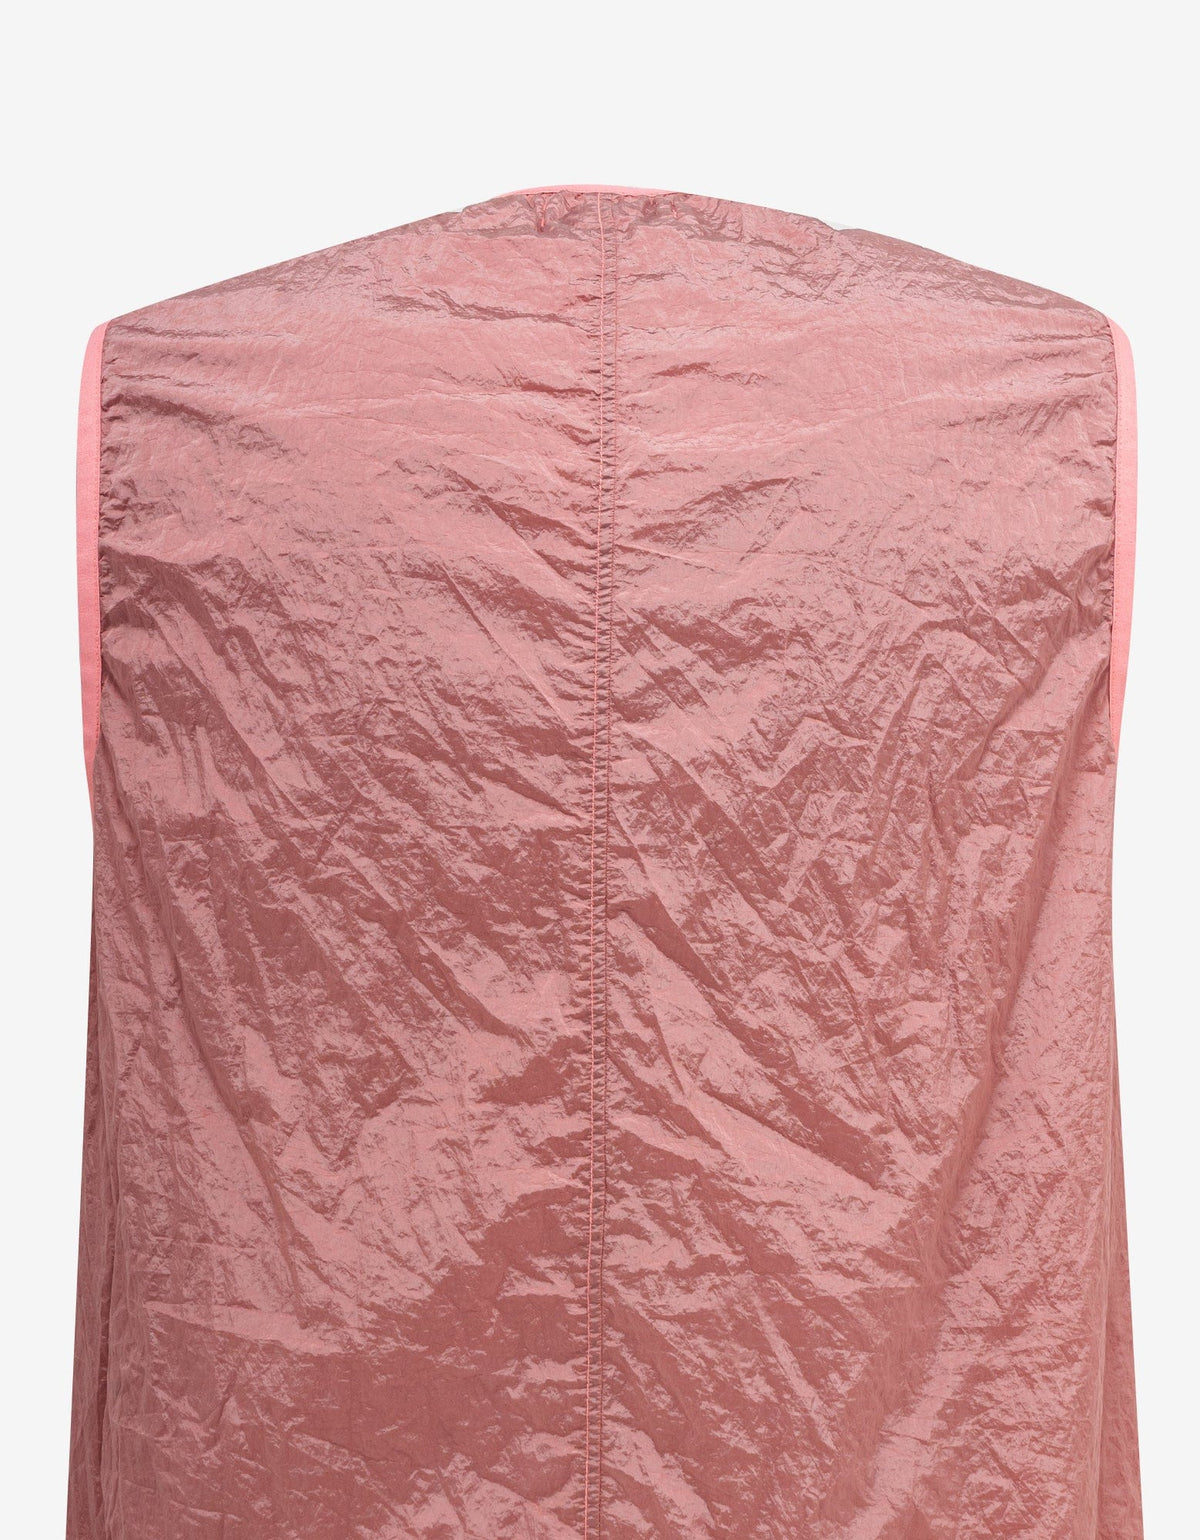 Stone Island Pink Nylon Metal Gilet